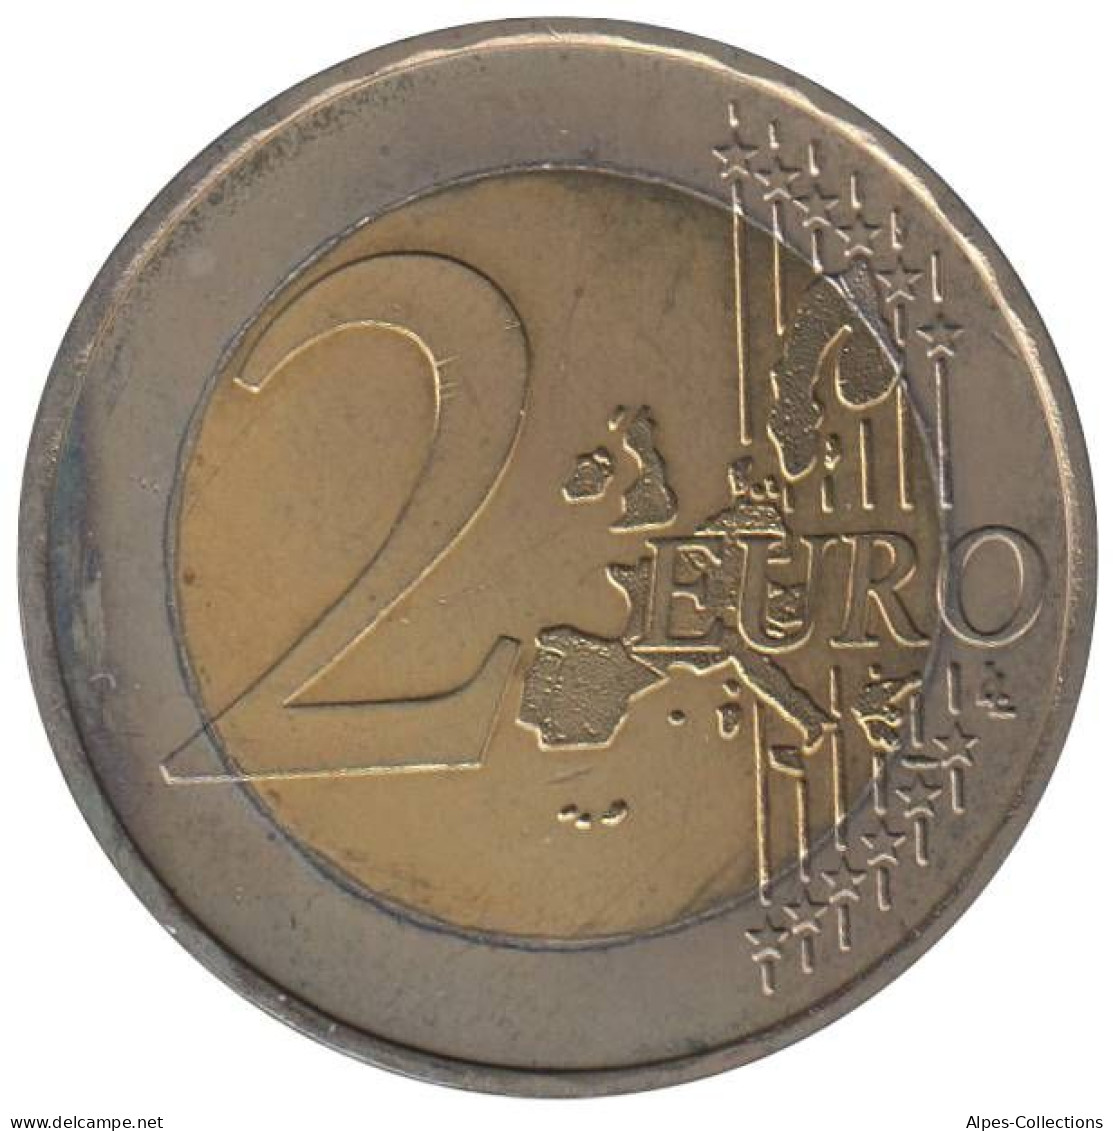 AL20002.1F - ALLEMAGNE - 2 Euros - 2002 F - Alemania